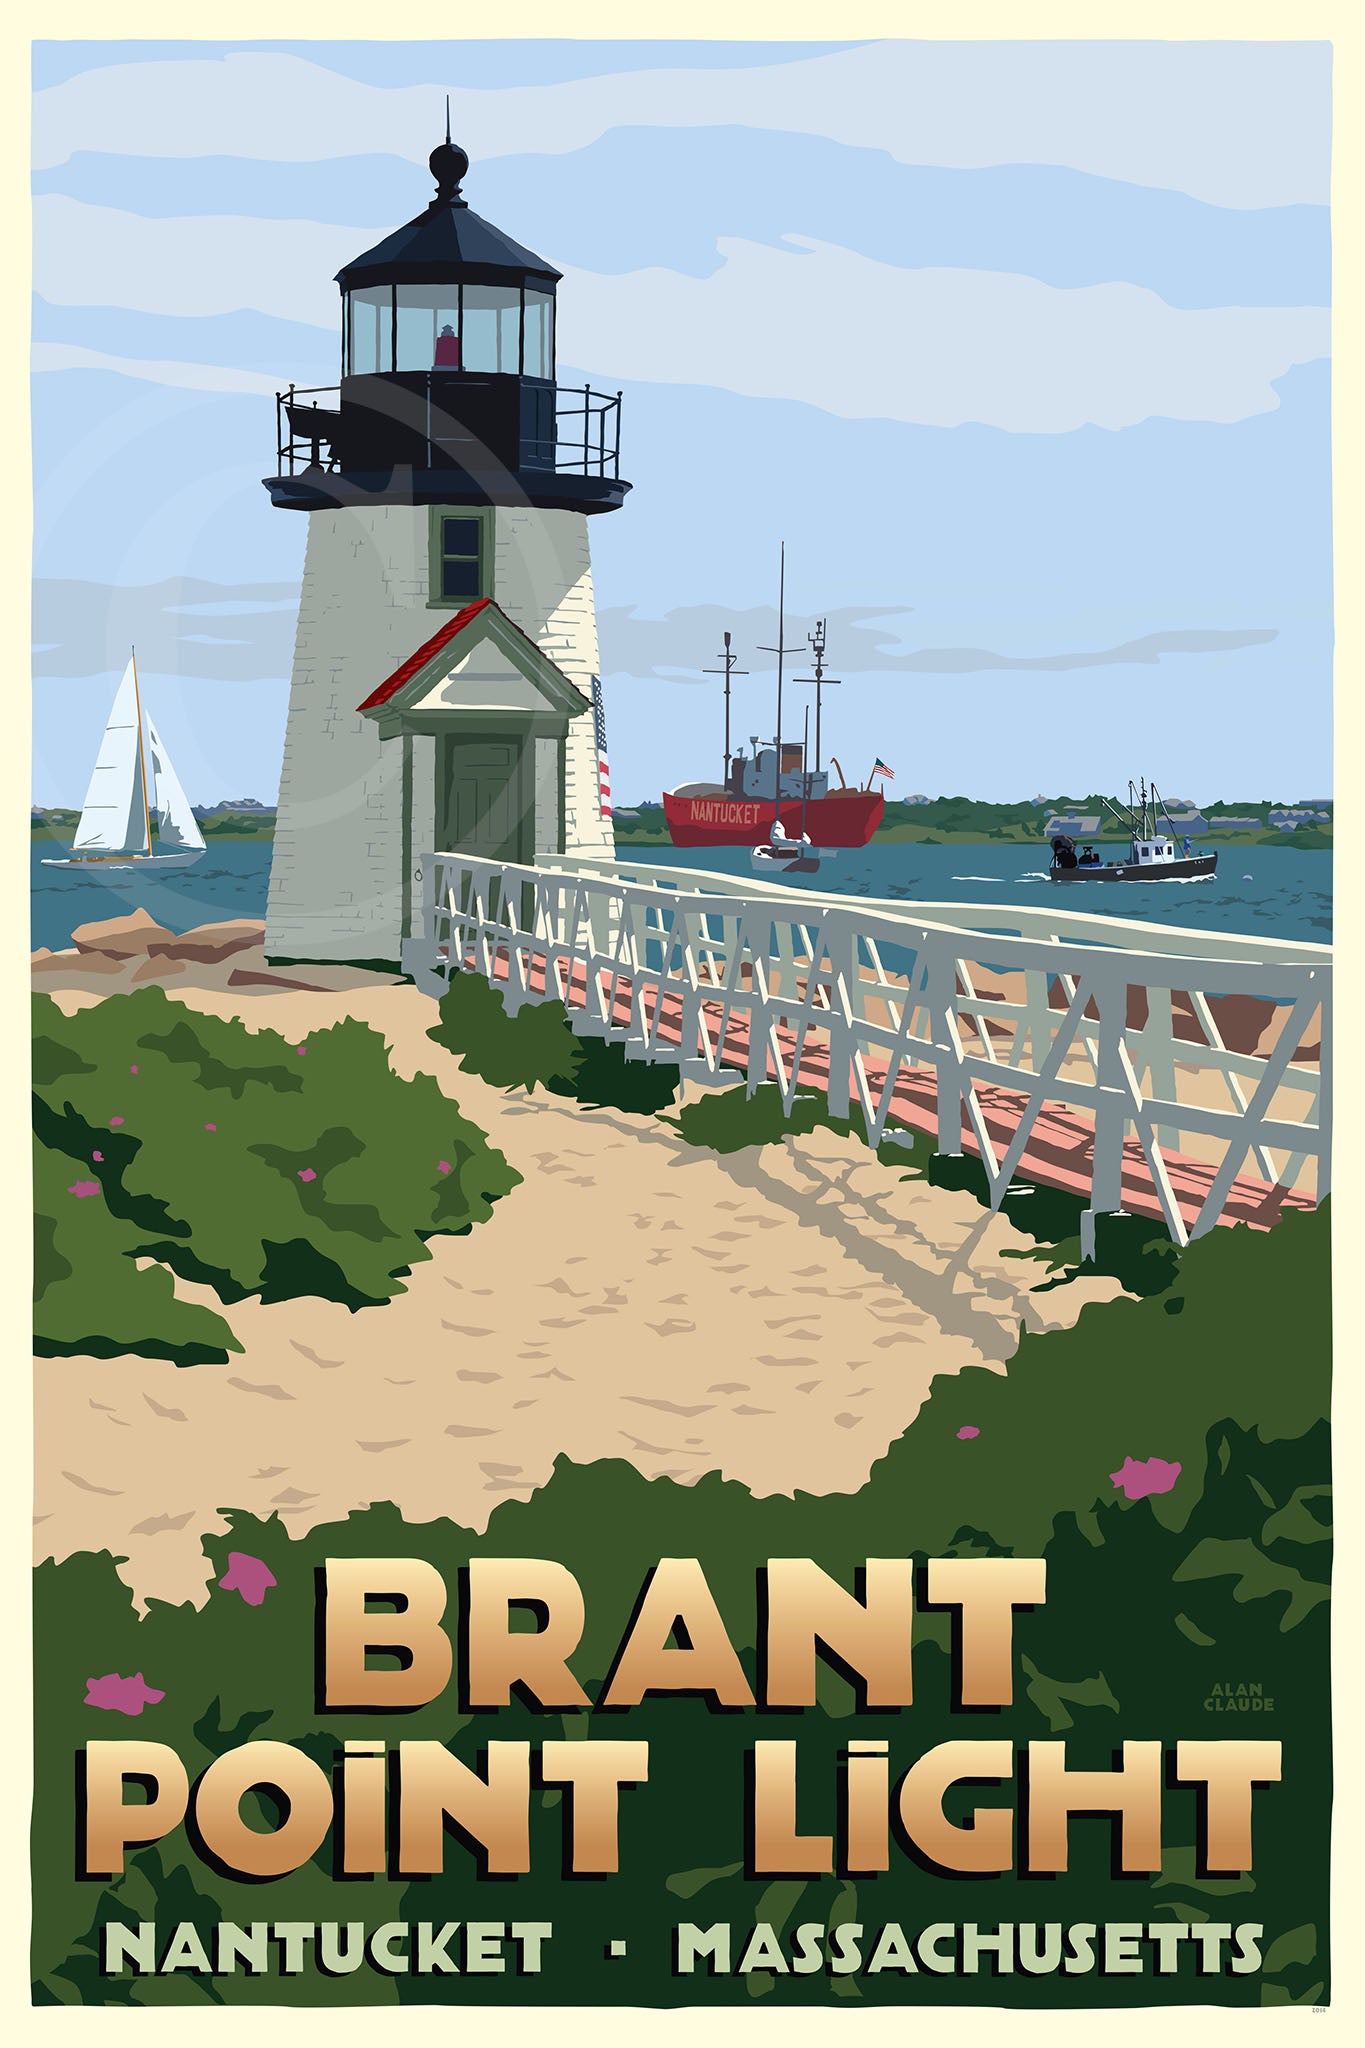 Brant Point Light Art Print 24" x 36" Travel Poster By Alan Claude - Massachusetts